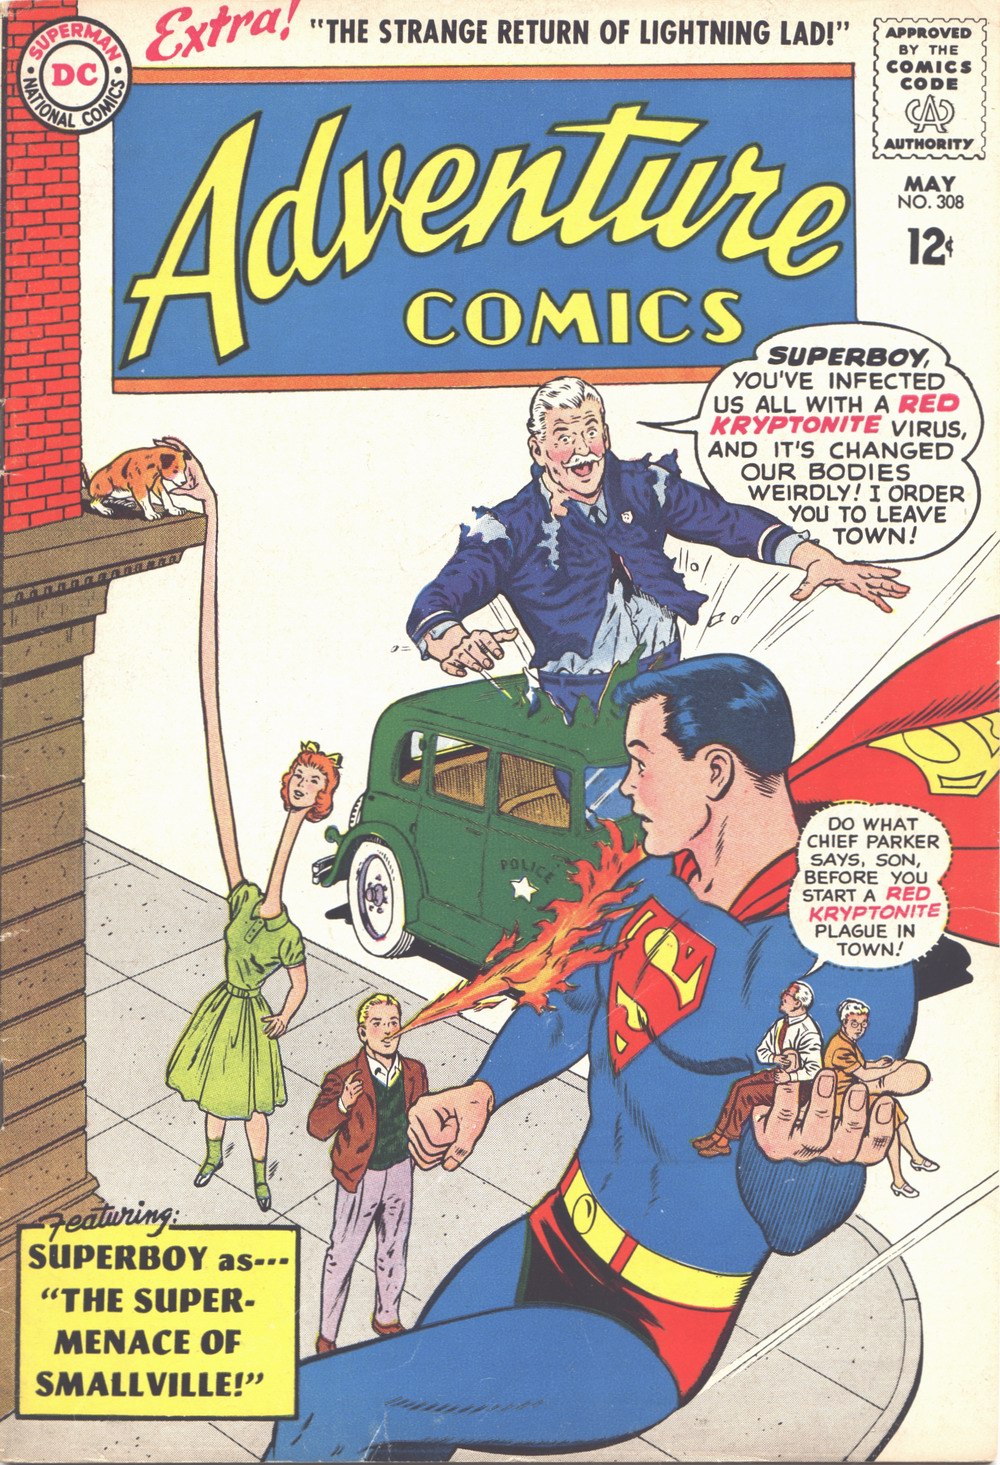 Days Of Adventure Adventure Comics 308 May 1963